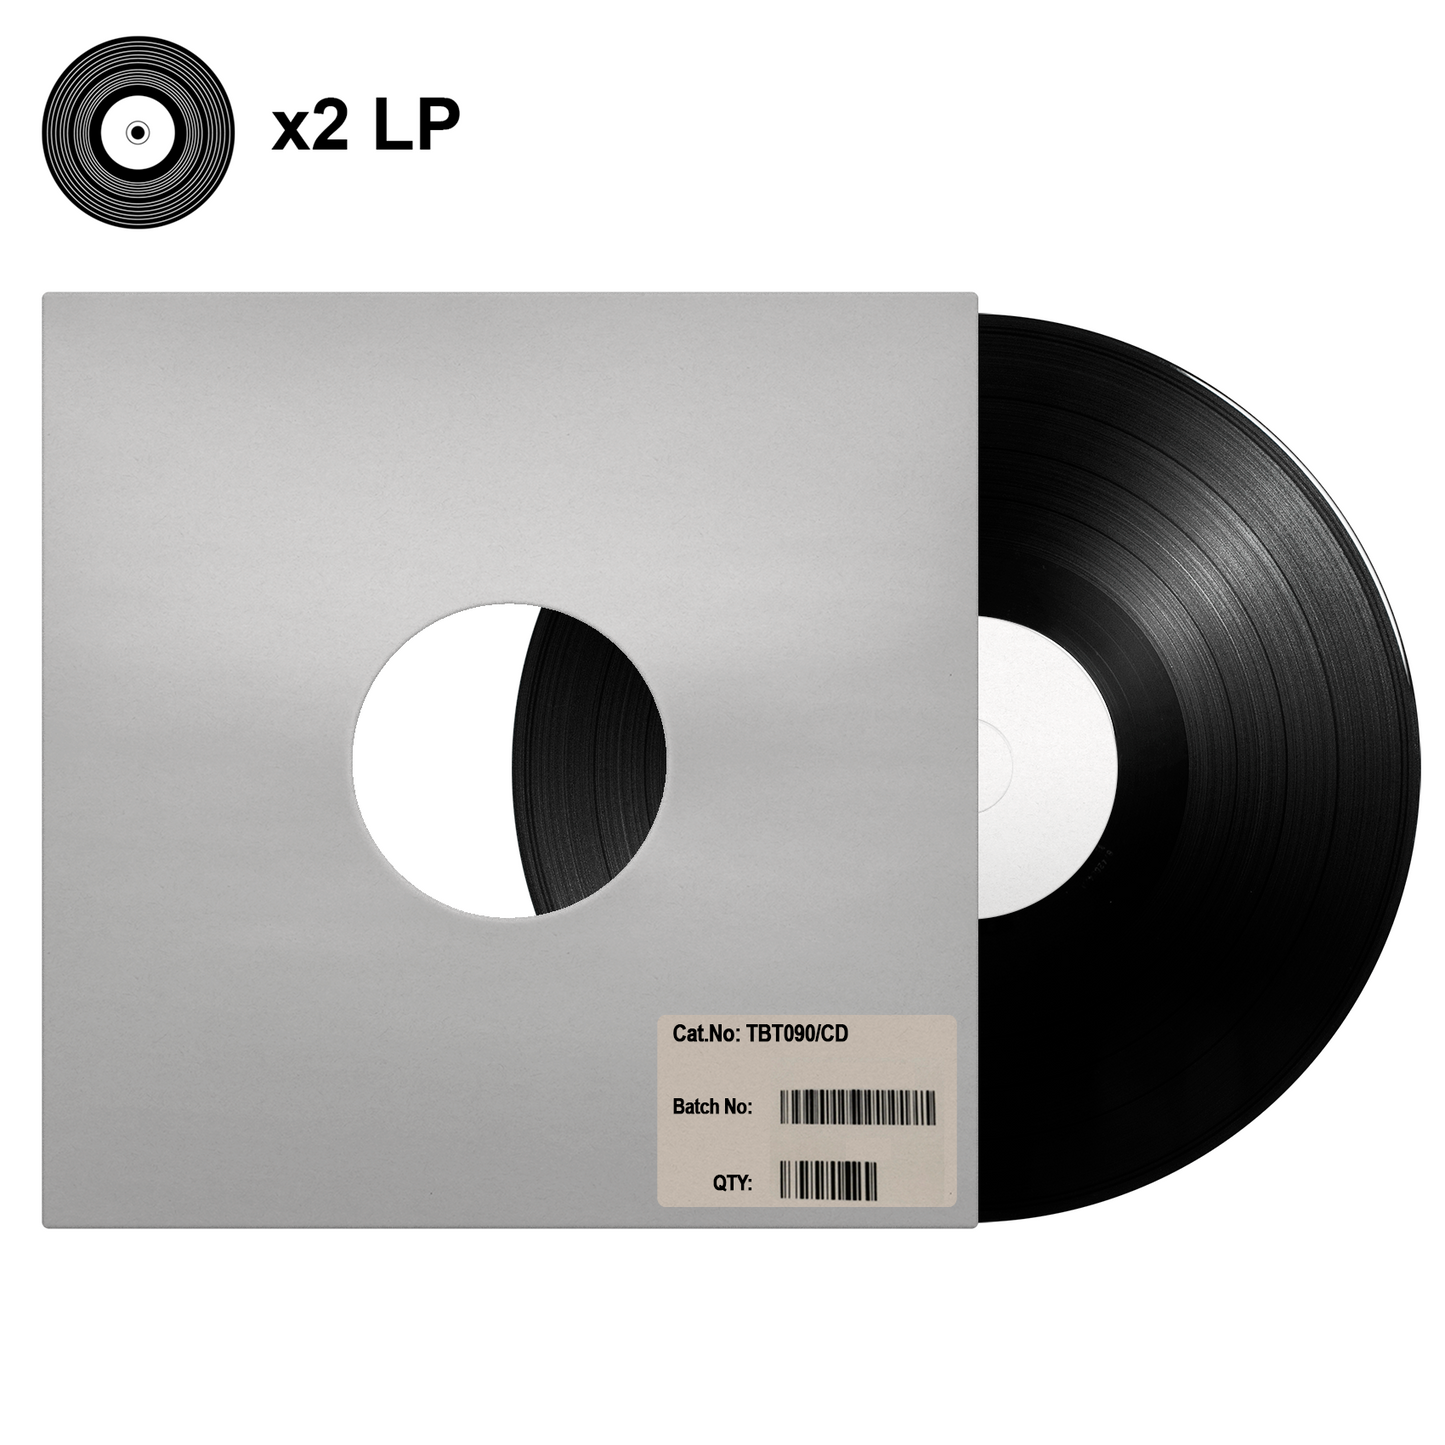 VentureX - "Together" Test Pressing Vinyl 2LP